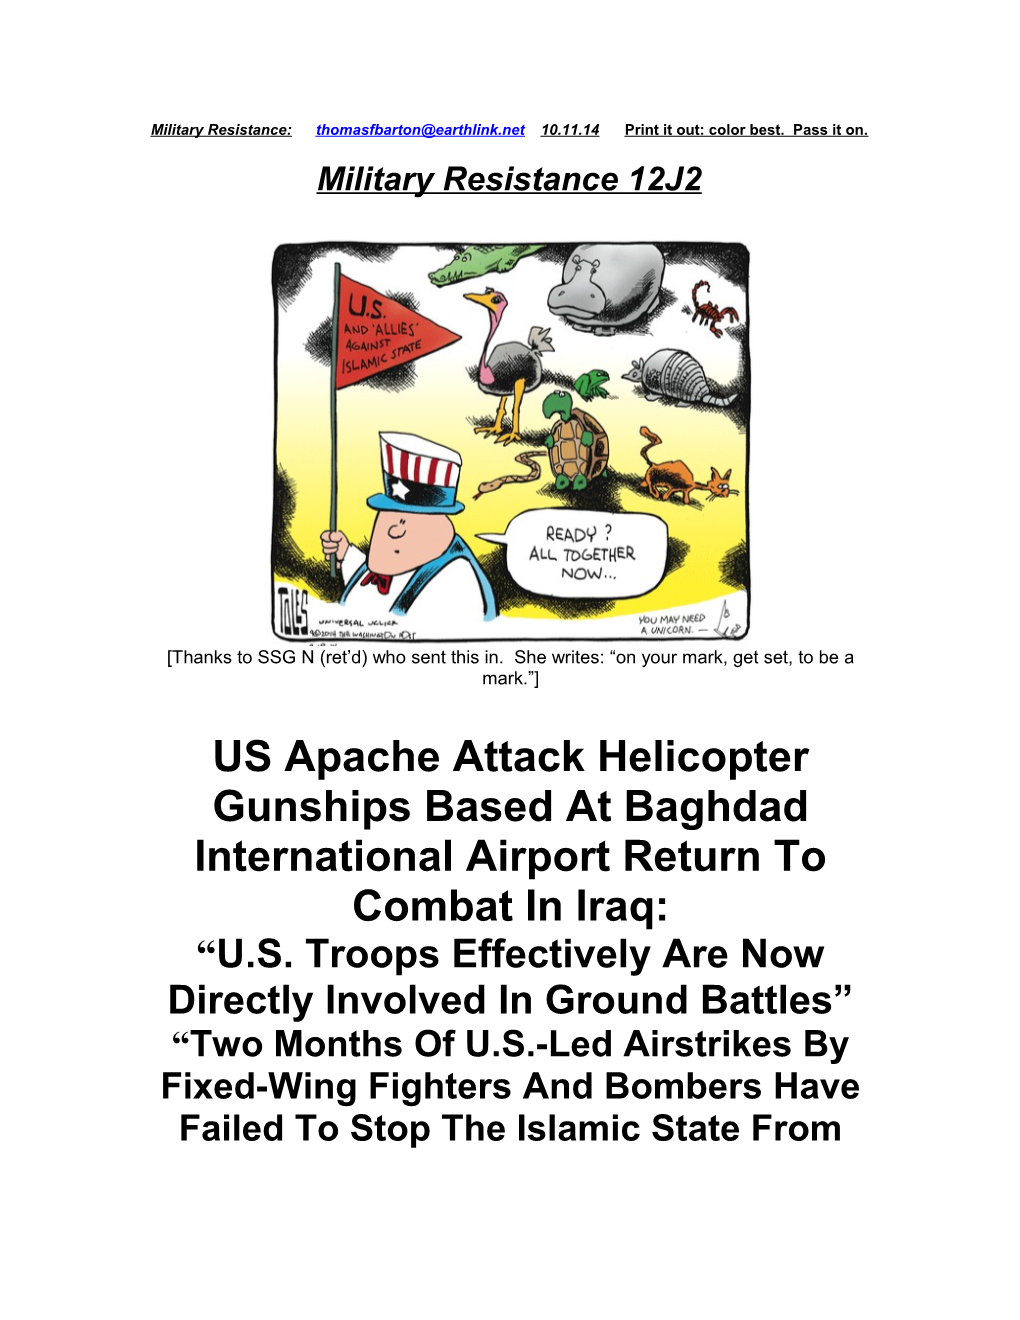 Military Resistance 12J2